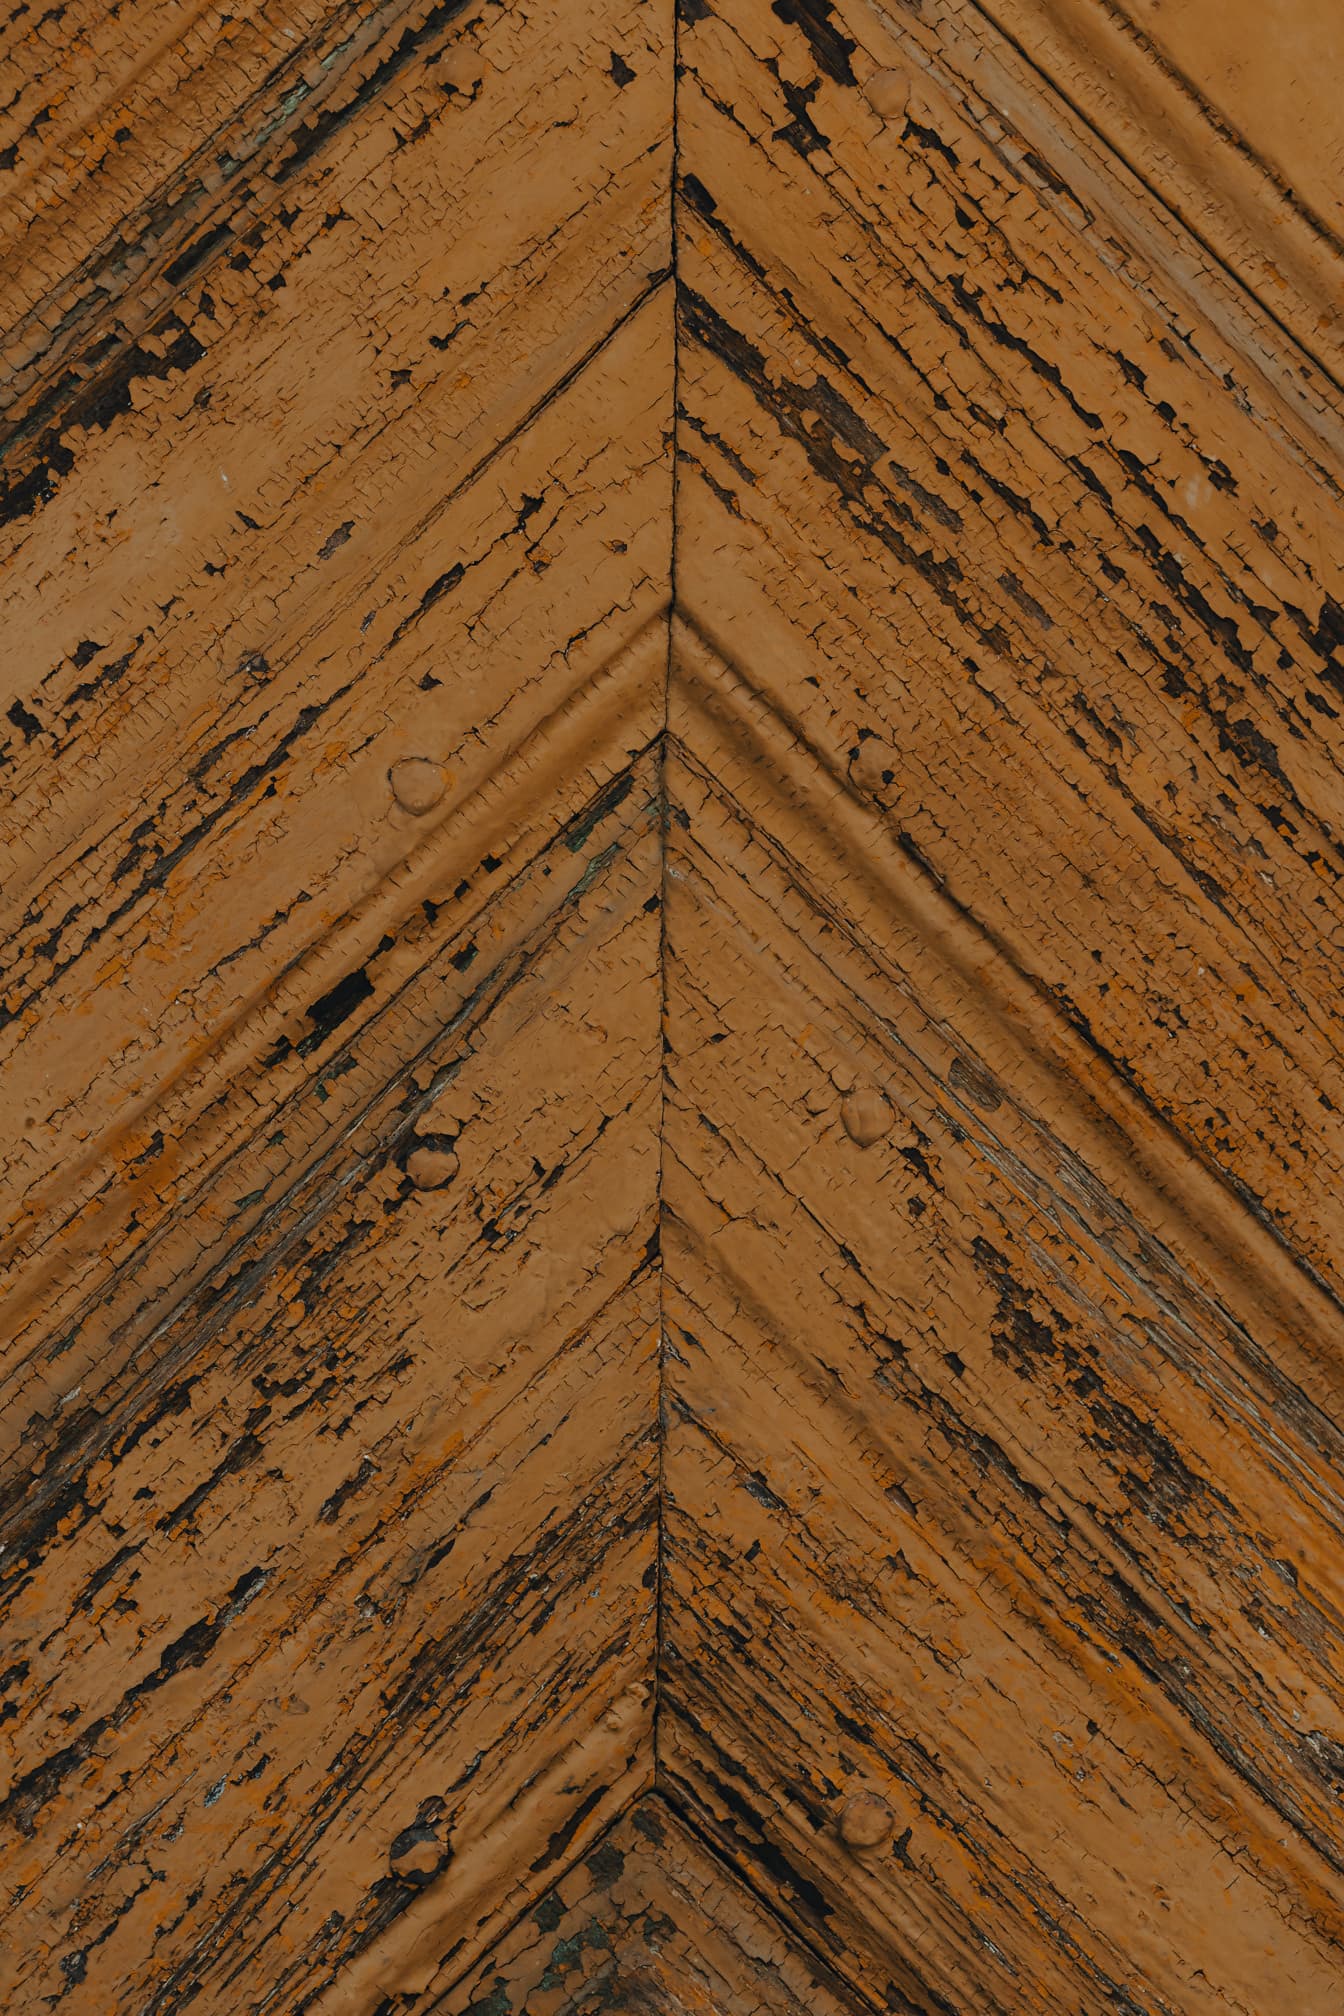 Lichtbruine droge ruwe verf op planken met diagonaal patroon